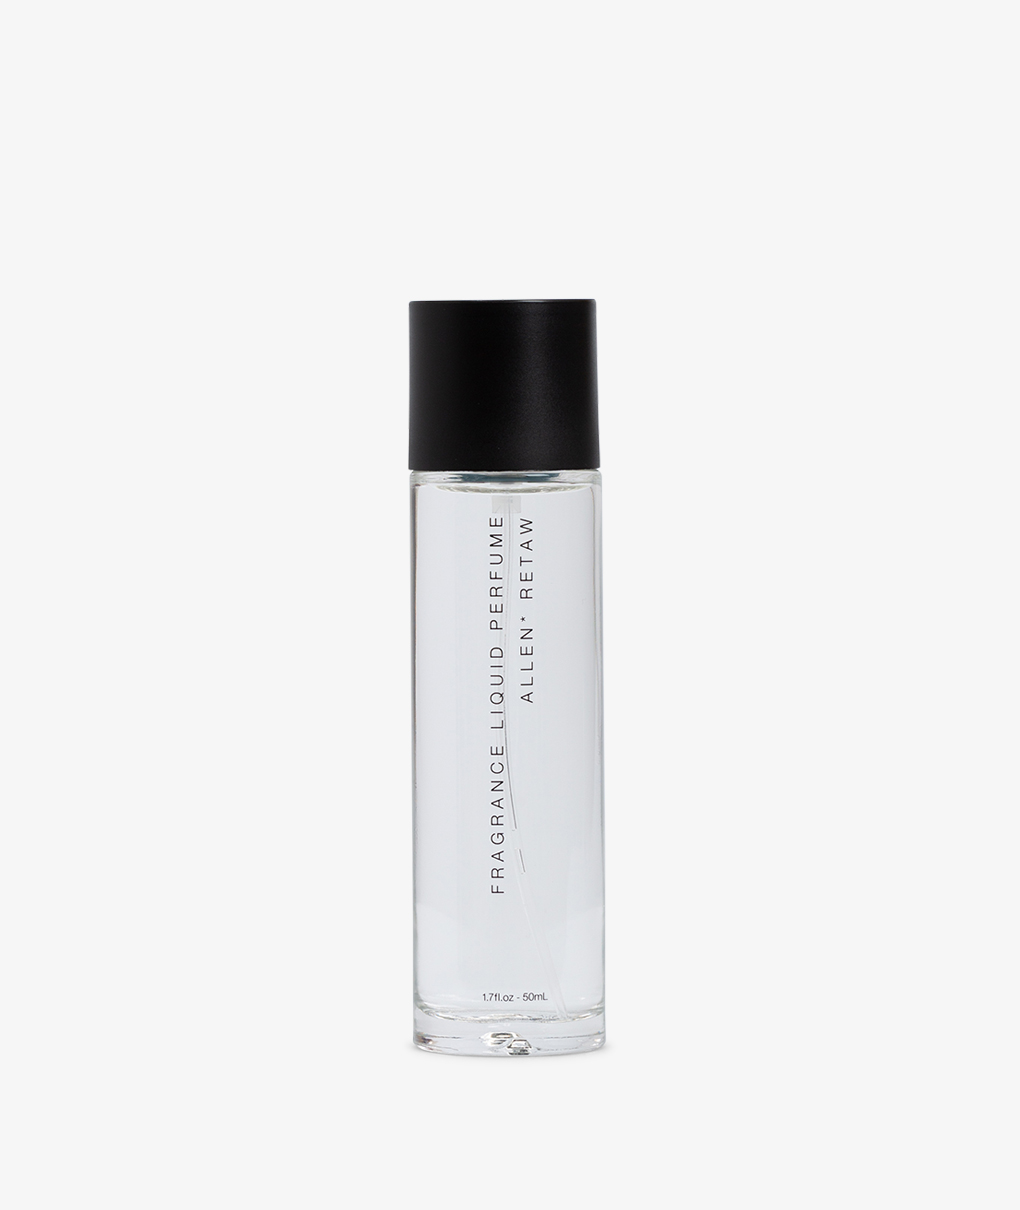 Norse Store | Shipping Worldwide - Fragrance Liquid Perfume